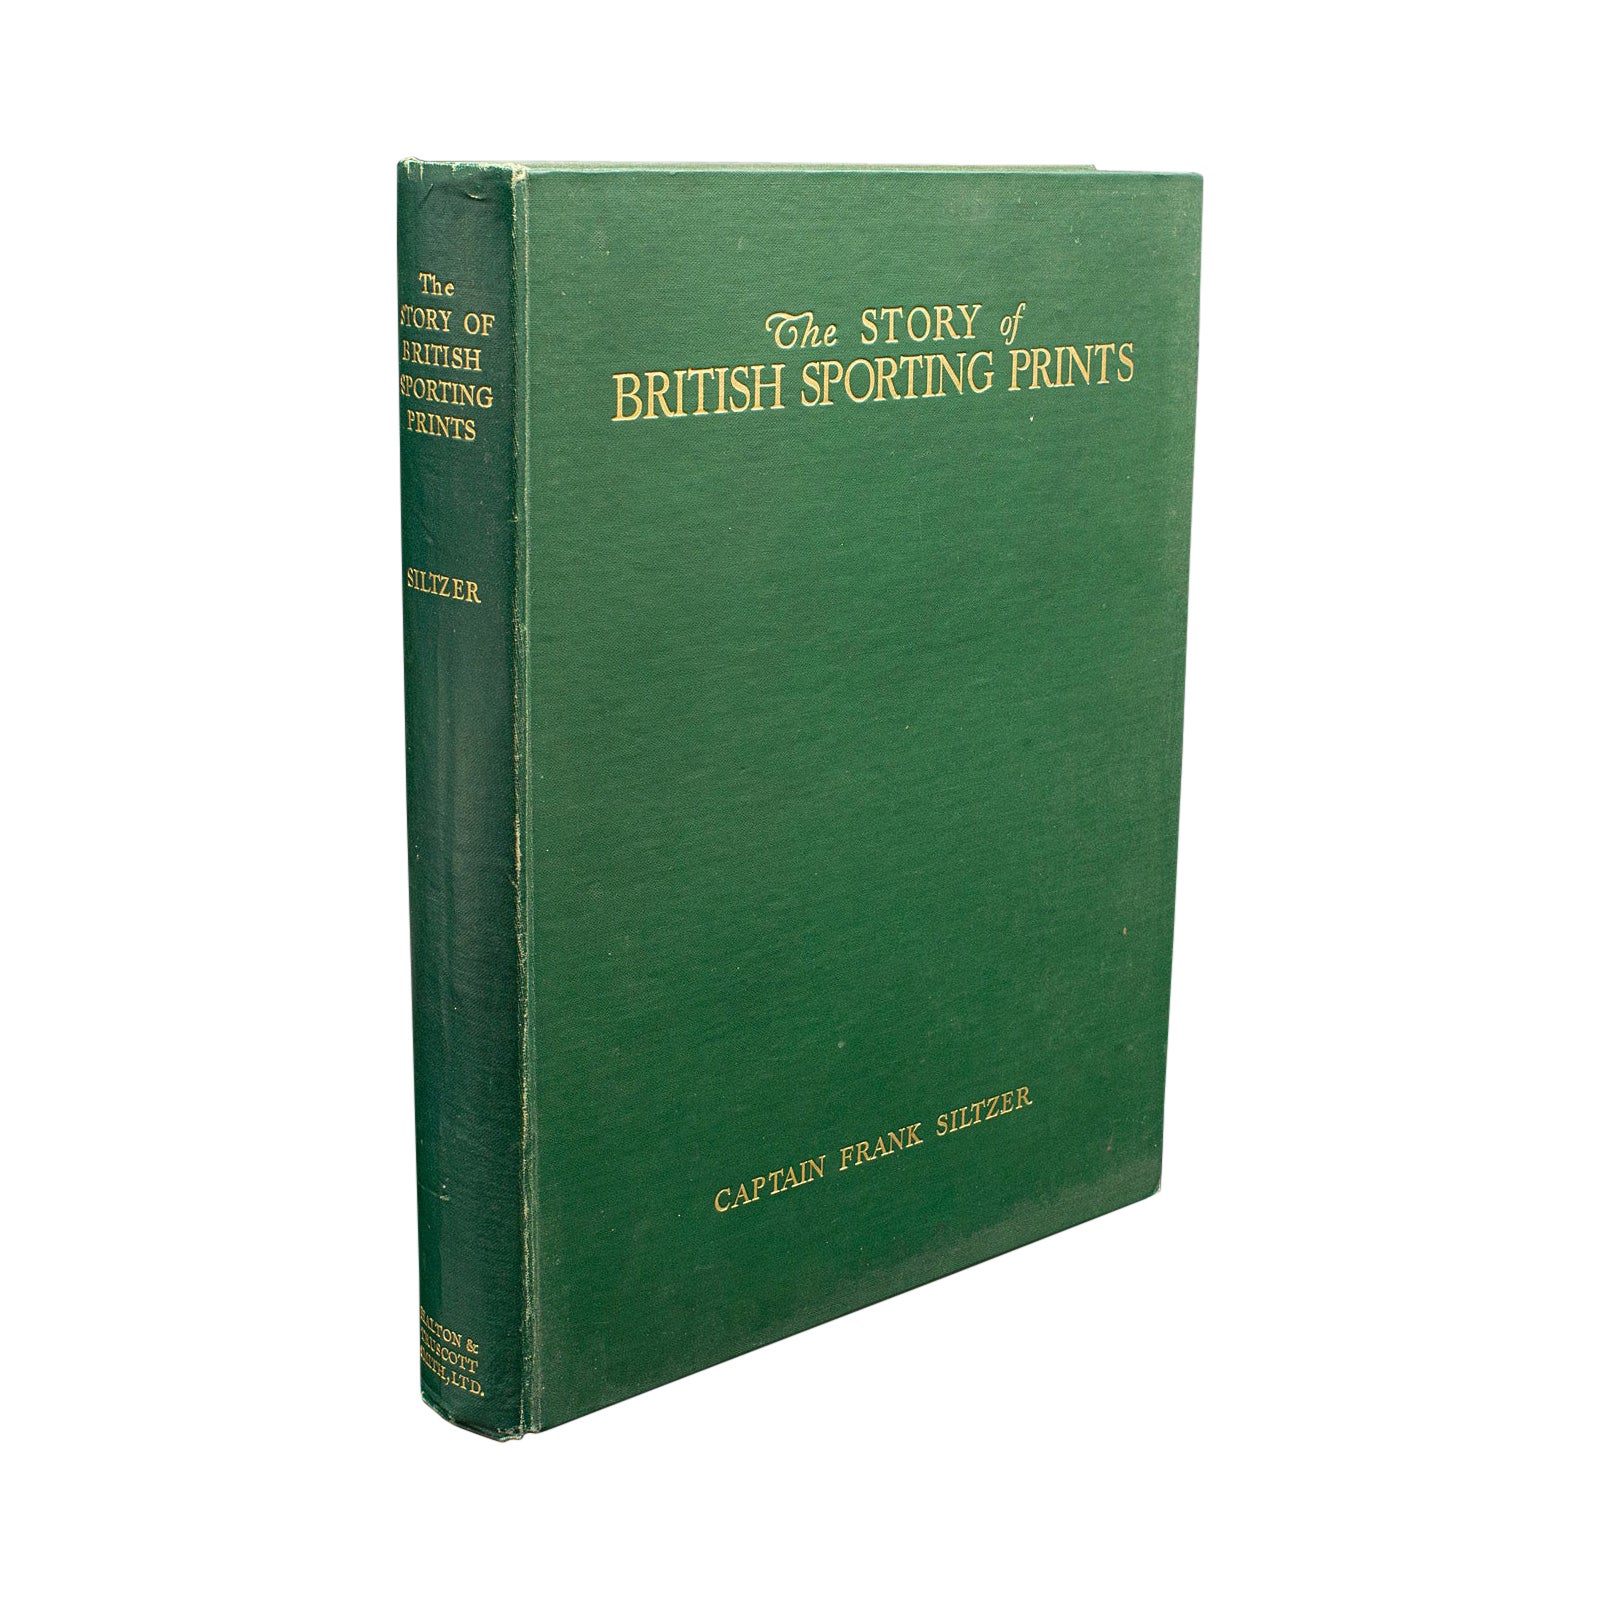 Livre vintage The Story of British Sporting Prints, anglais, édition limitée, 1929